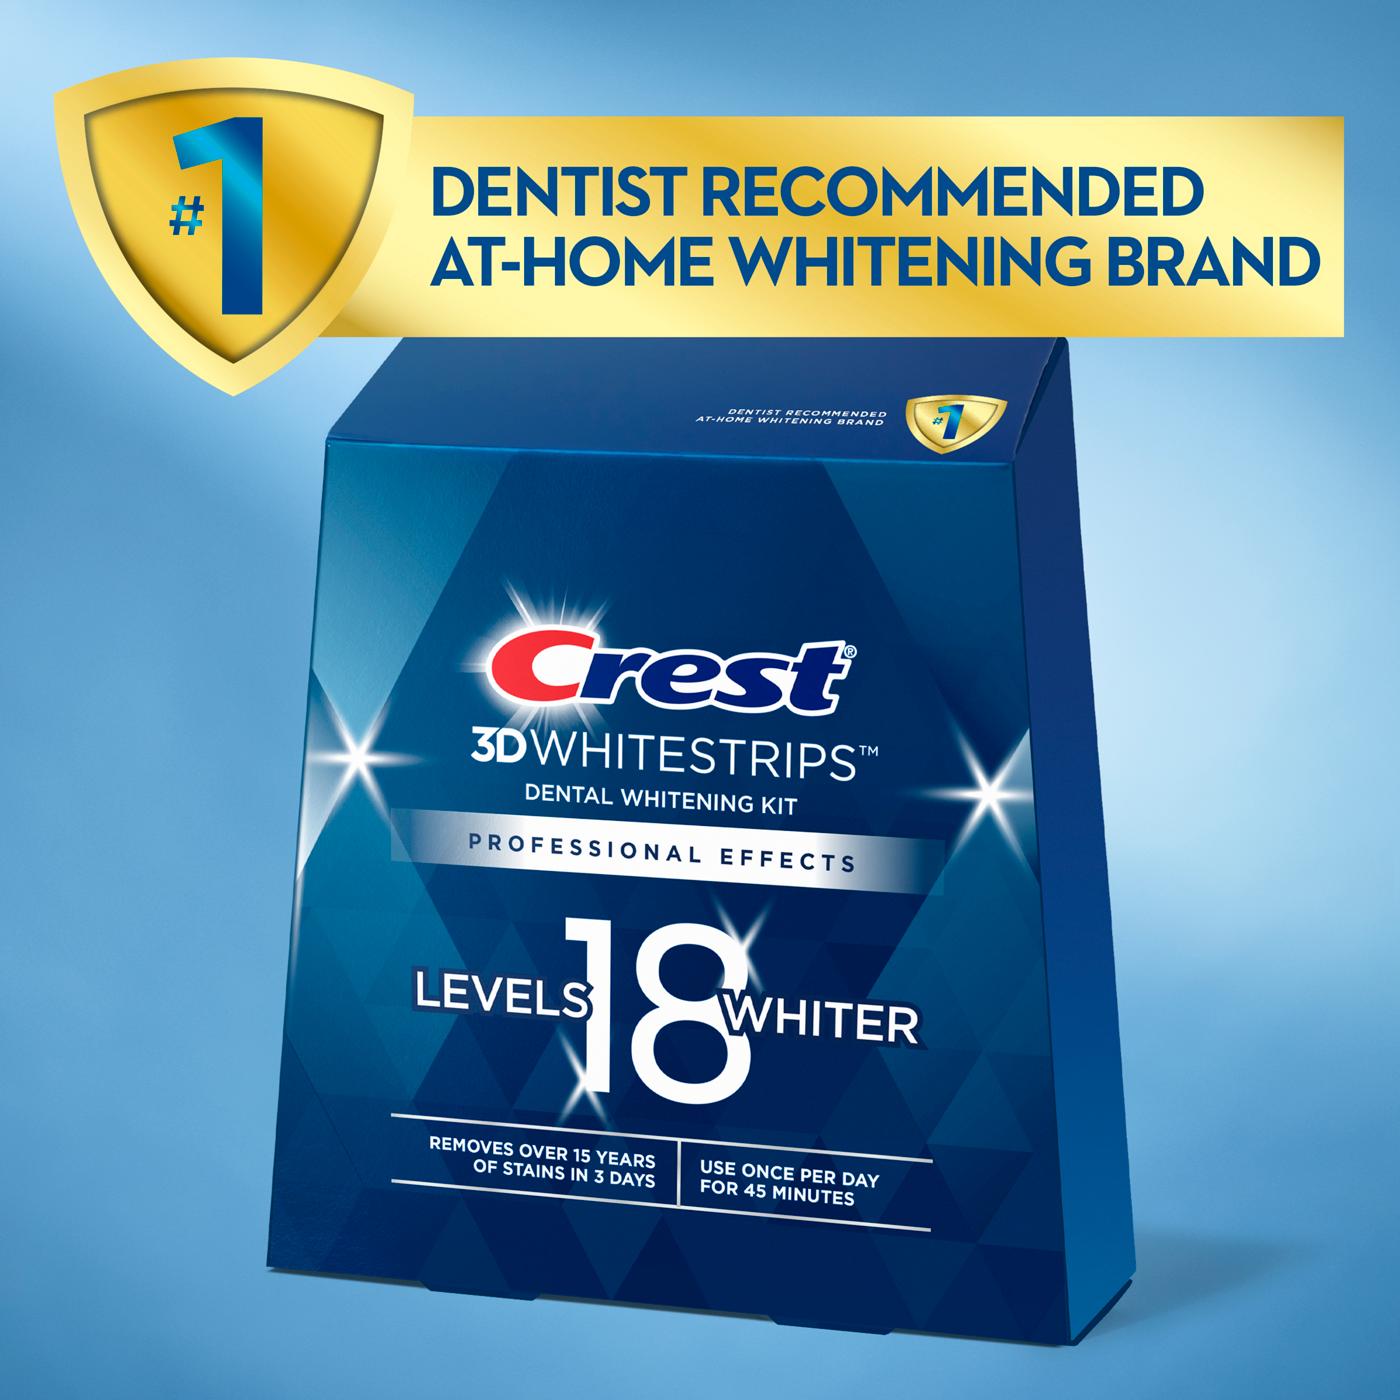 Crest 3D Whitestrips Professional Effects Dental Whitening Kit; image 5 of 6